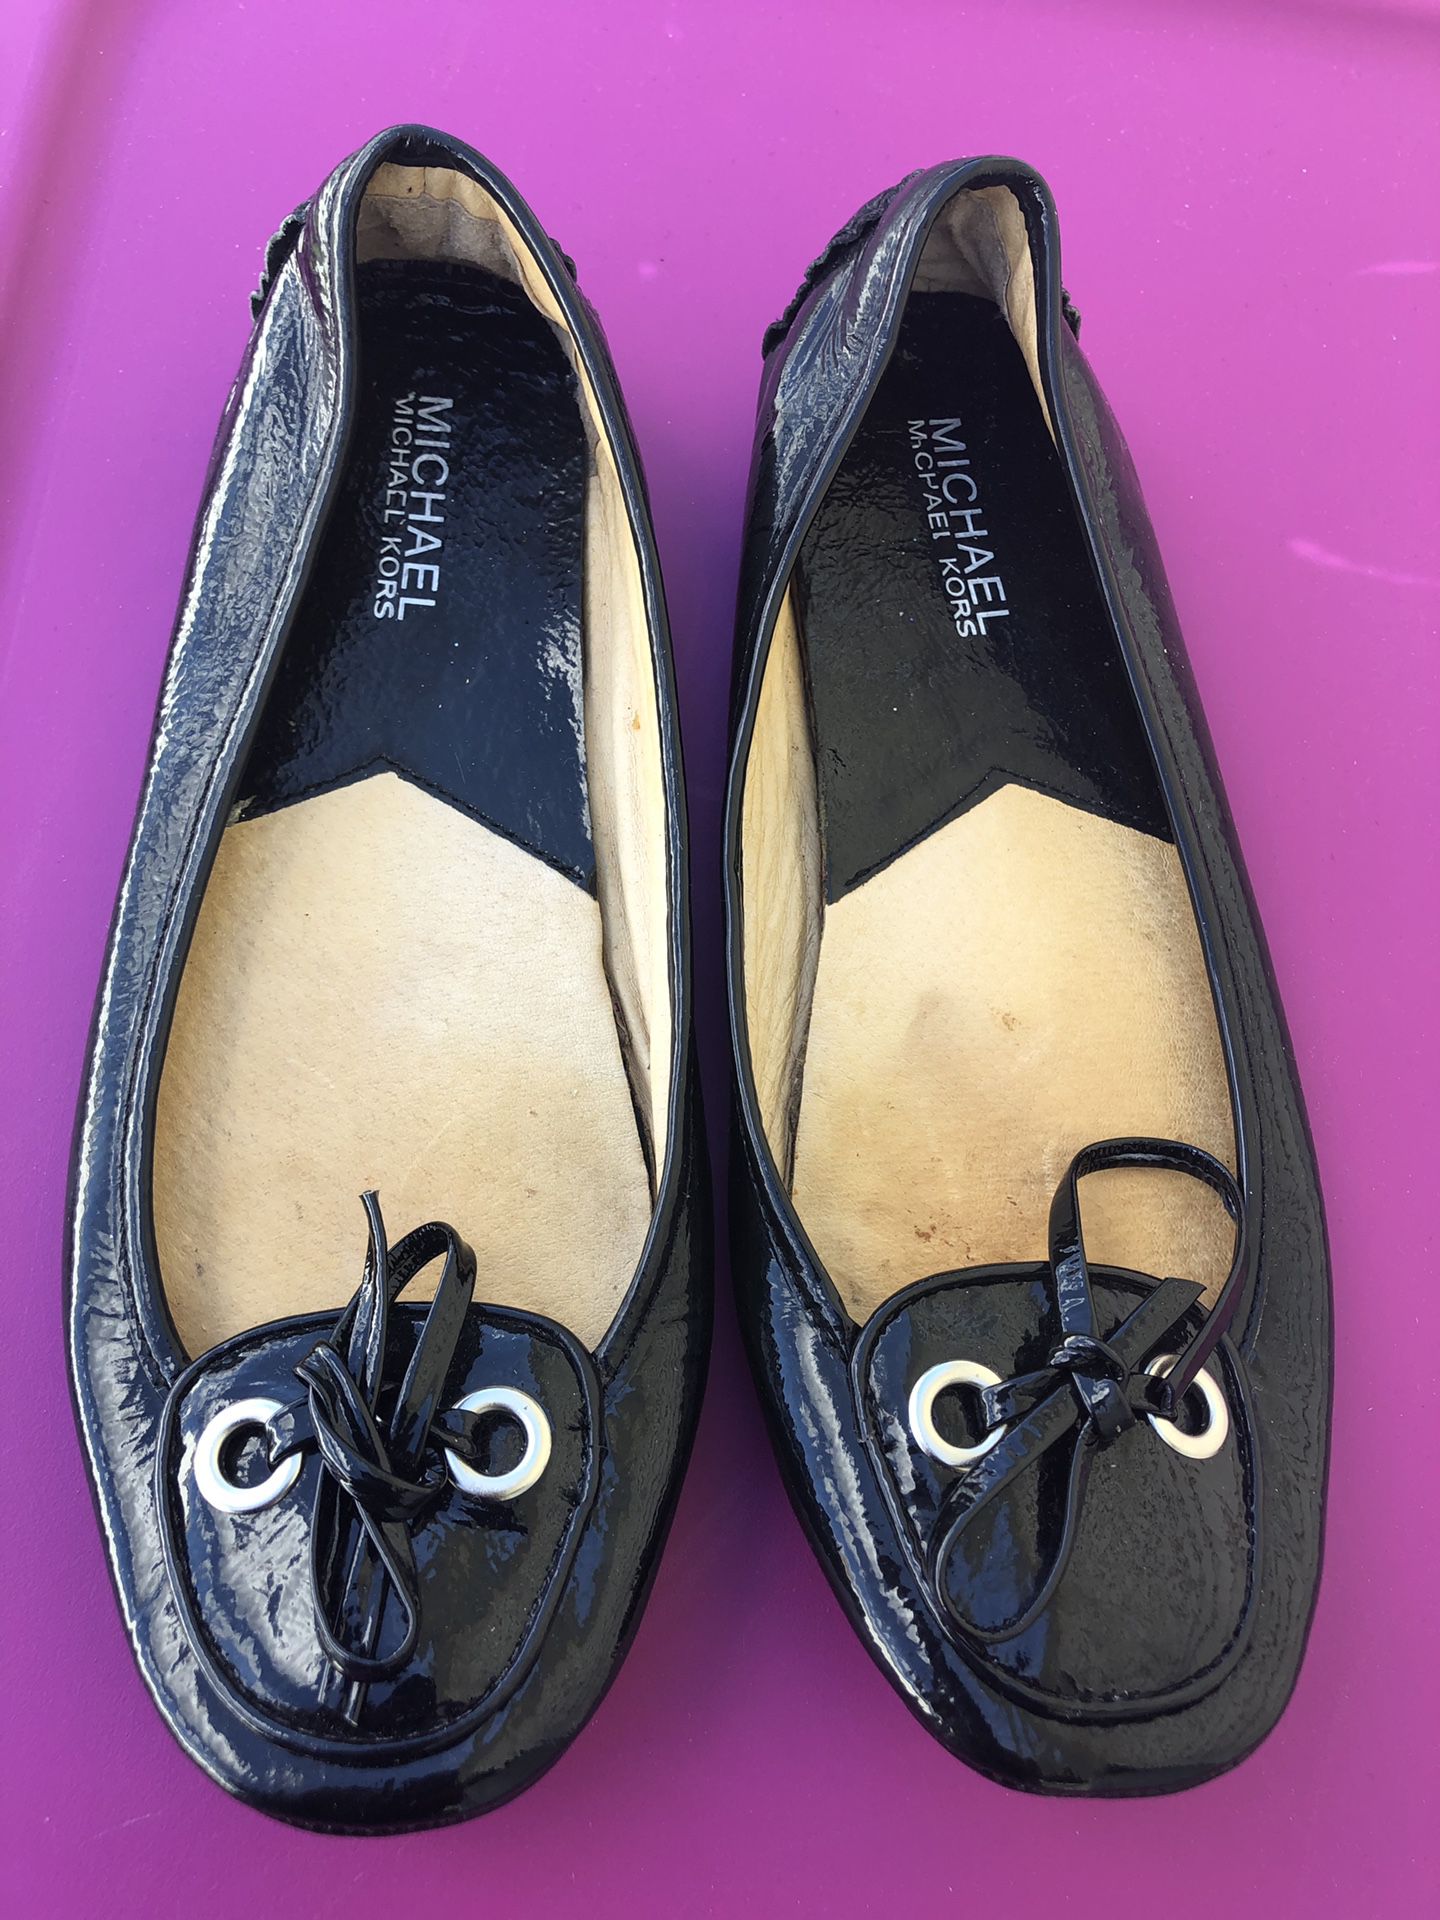 Women’s leather Michael Kors shoes: size 7